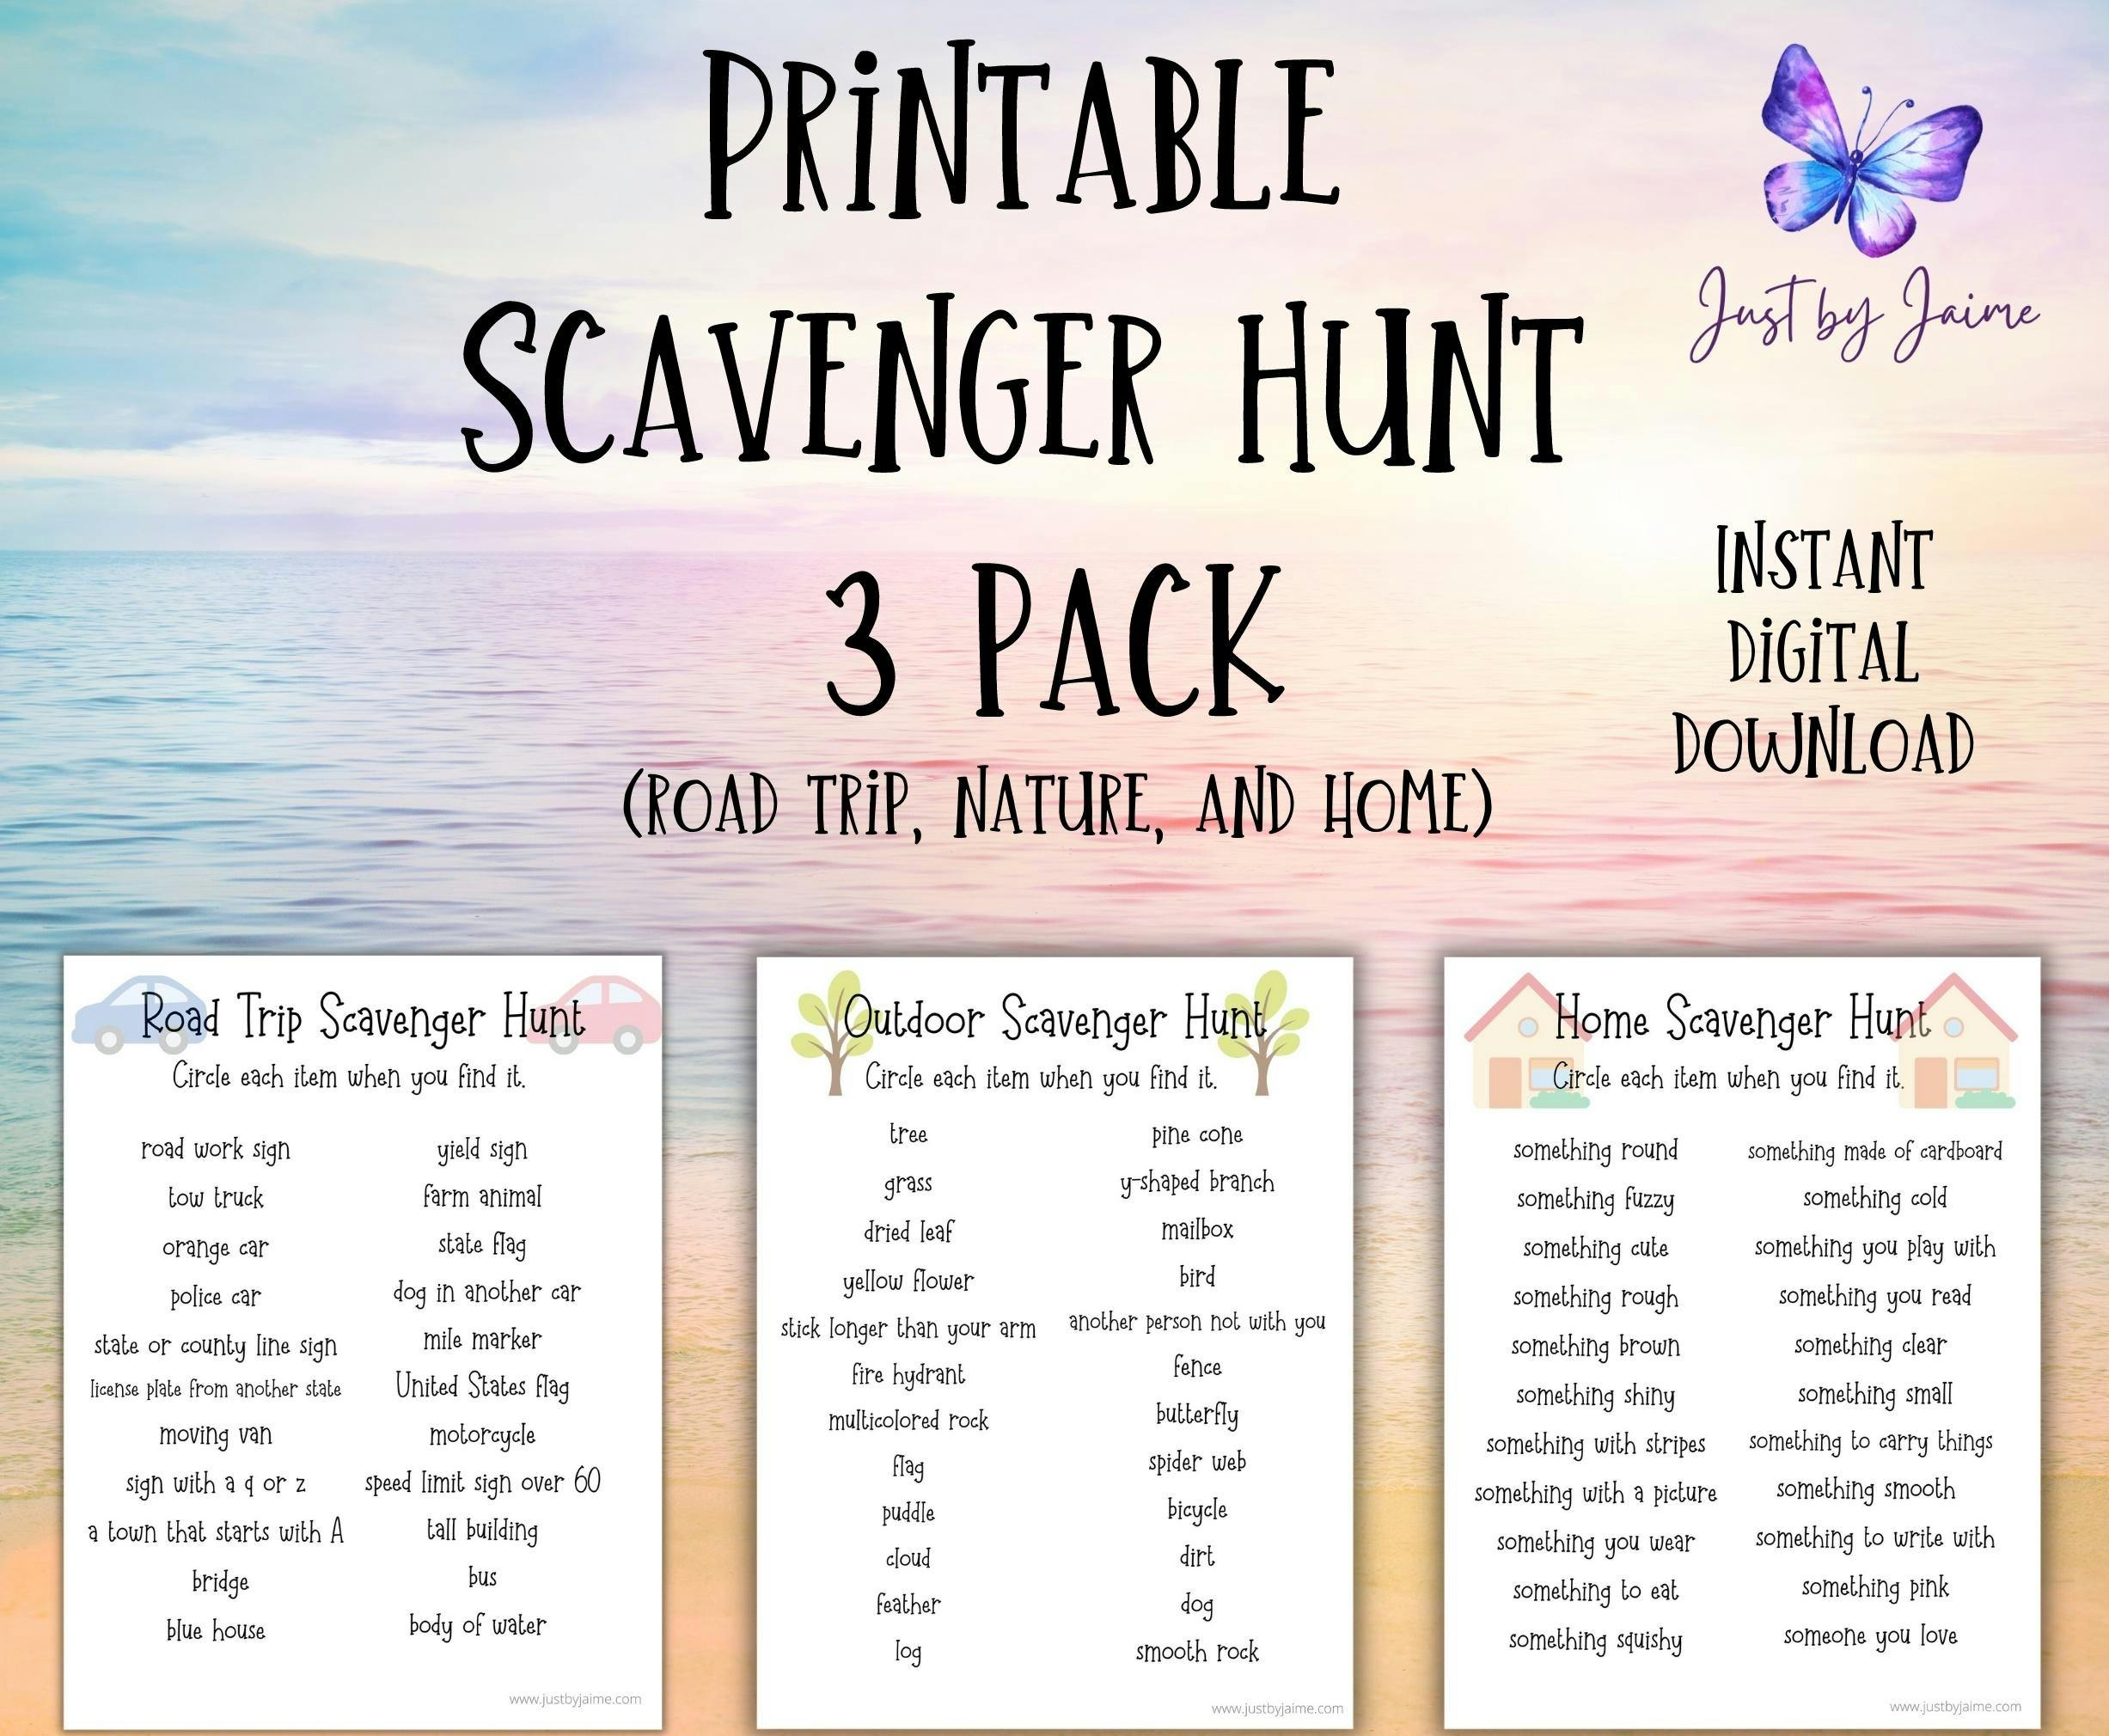 Printable scavenger hunt 3 pack 